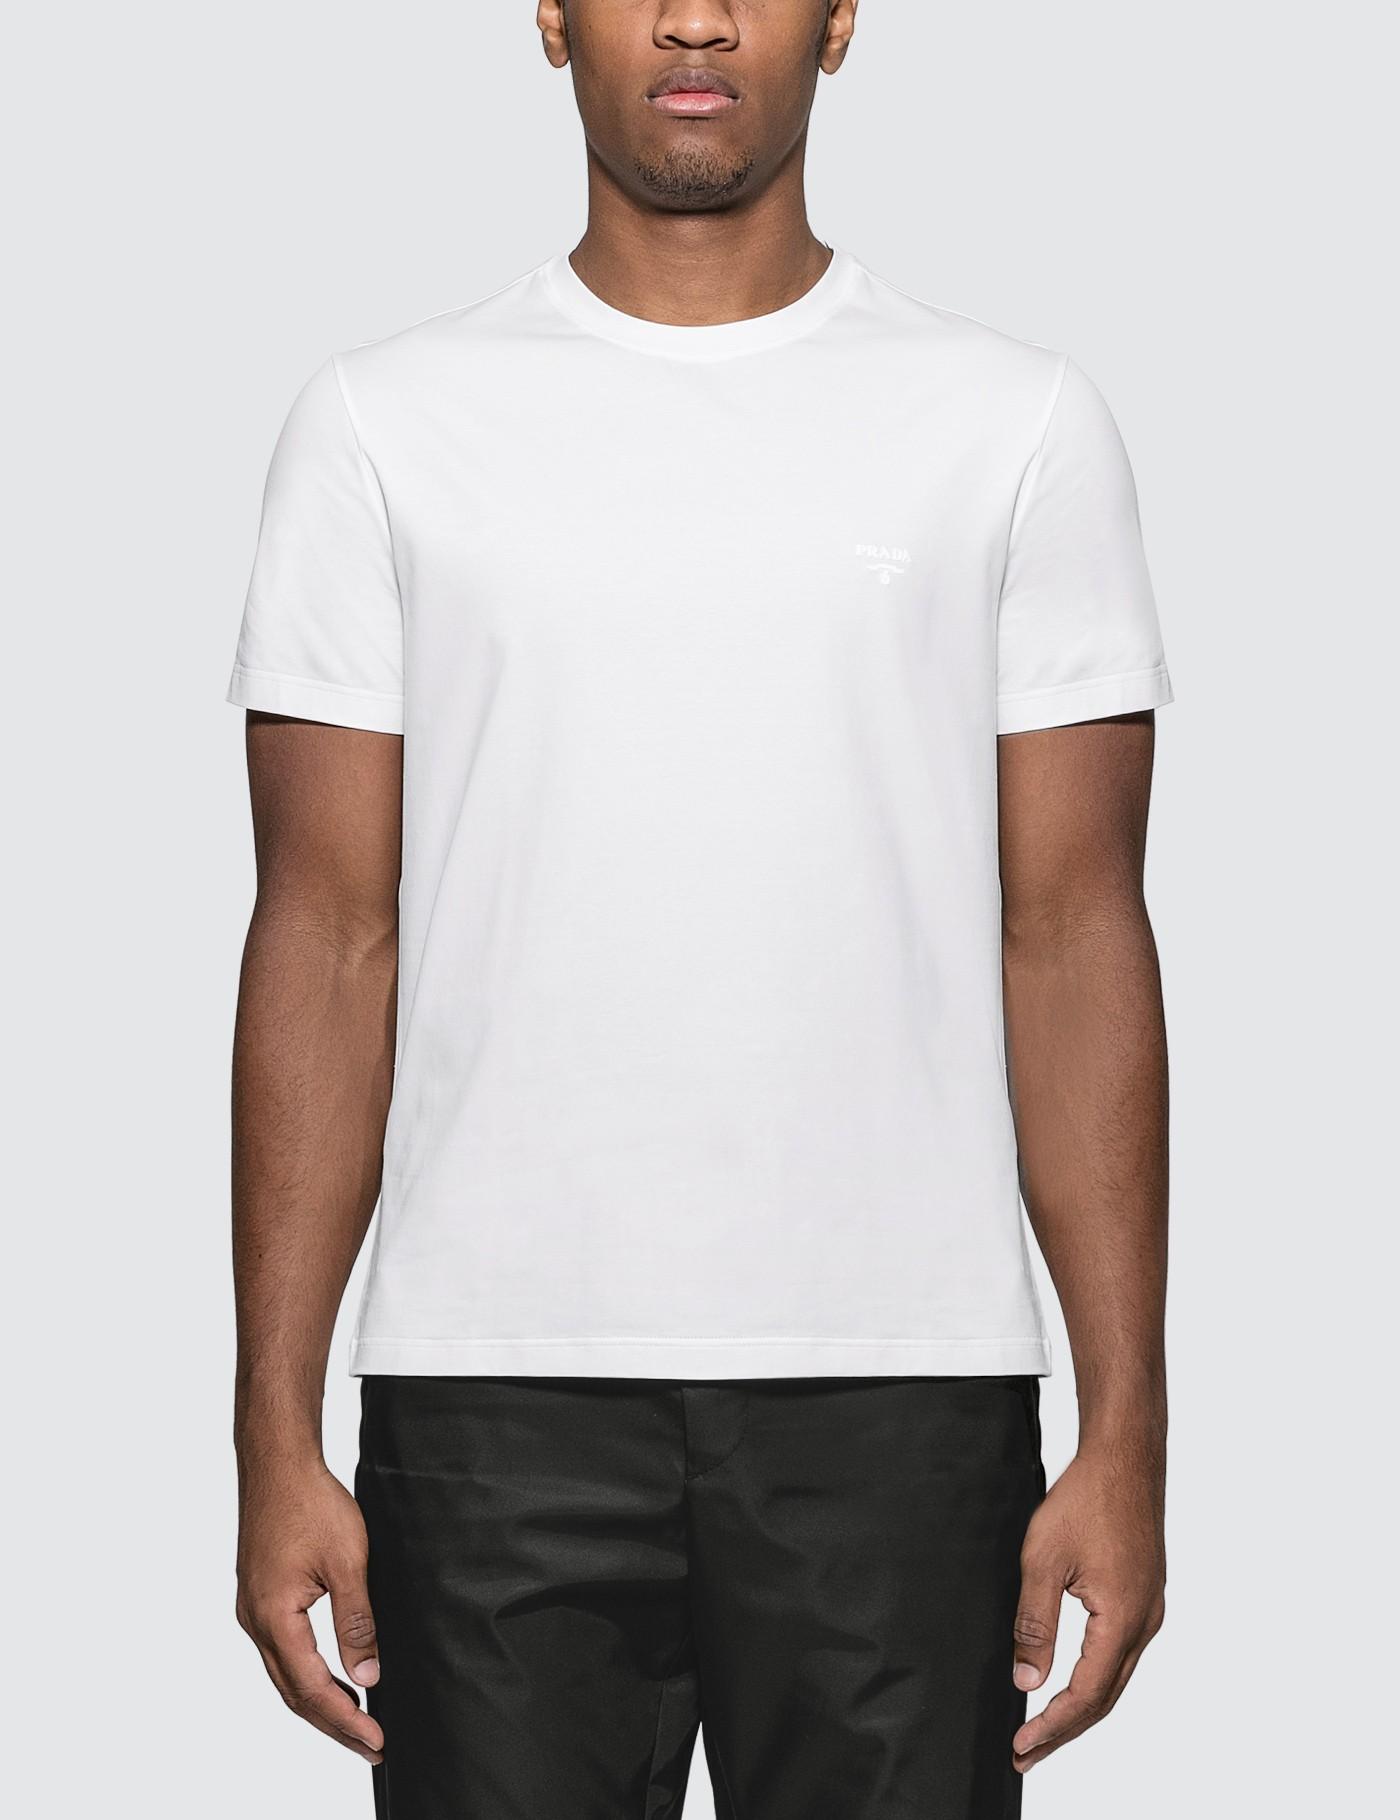 Prada Cotton Stretch Frame Logo T-shirt in White for Men - Lyst